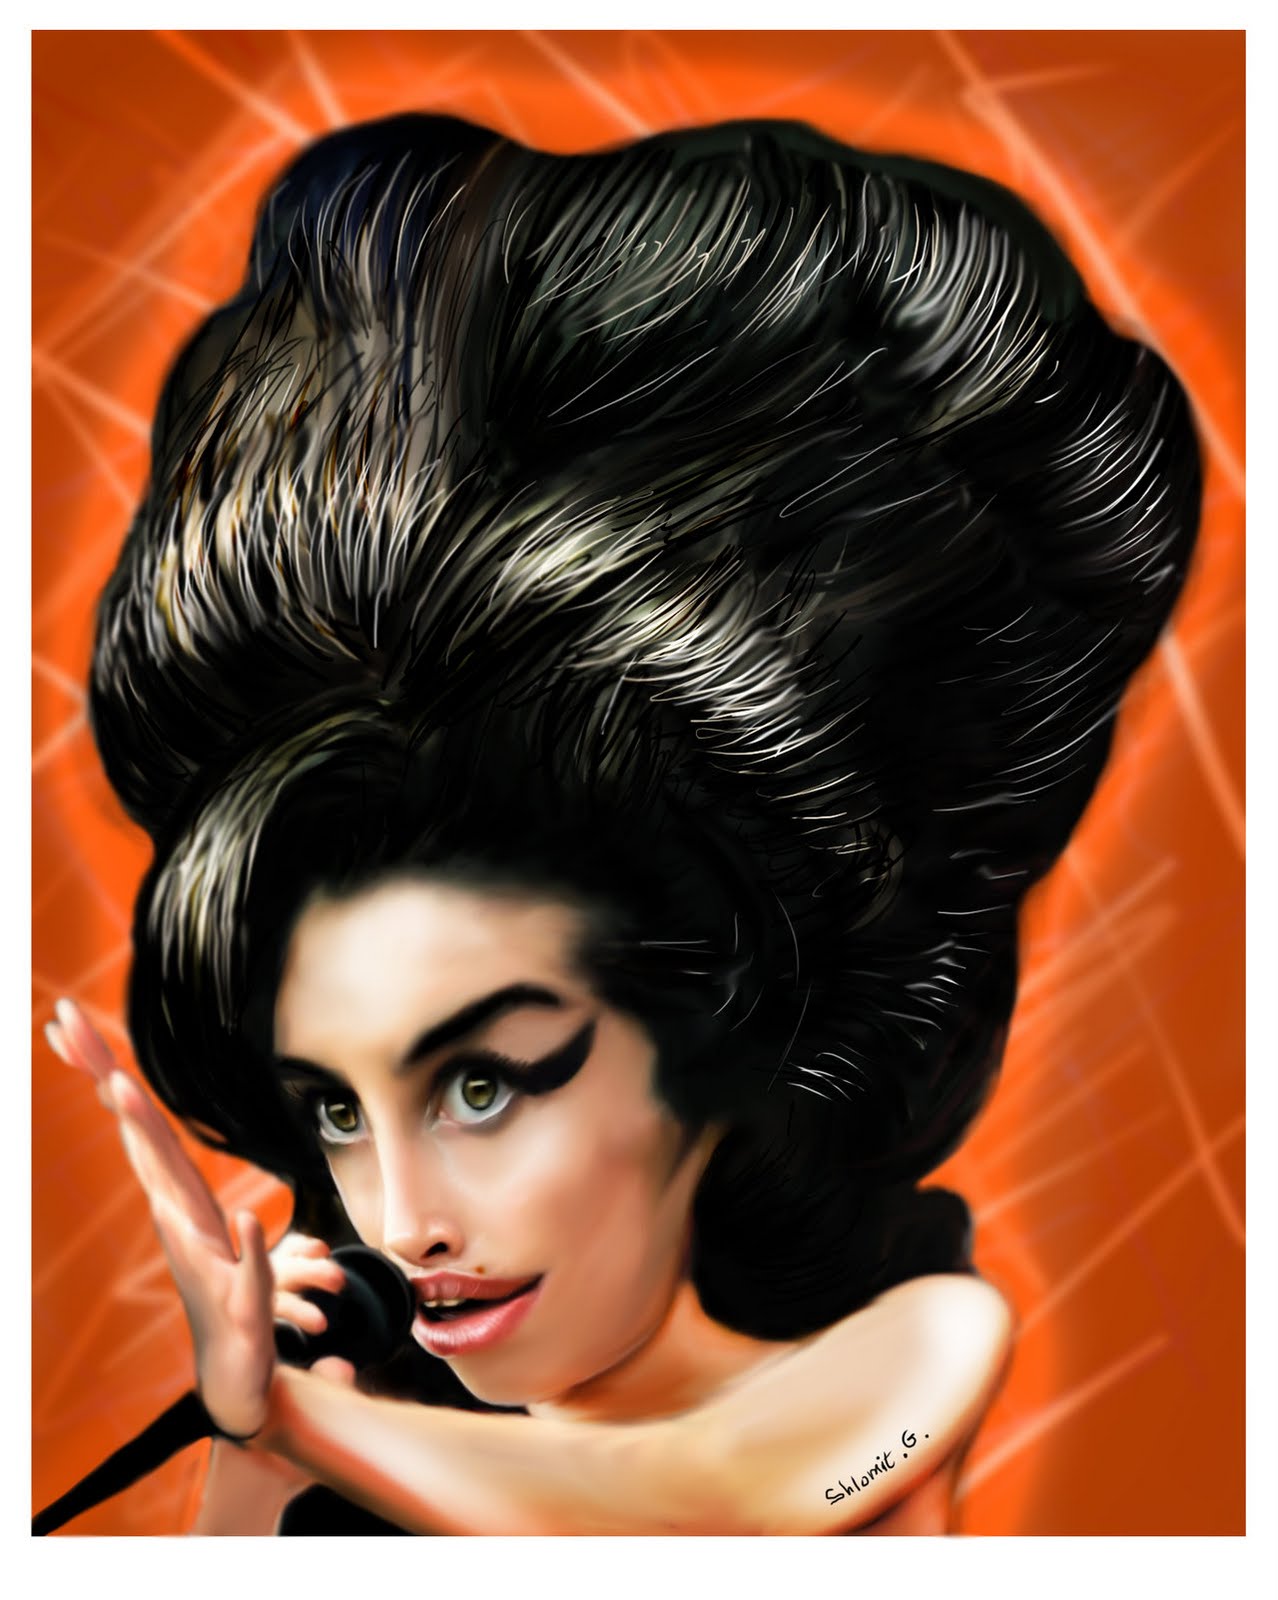 http://4.bp.blogspot.com/-PKRHJsofw6o/Te_OnbXvPtI/AAAAAAAAG70/-whU3XP4hDI/s1600/Amy_Winehouse_caricature_by_shlomit.jpg